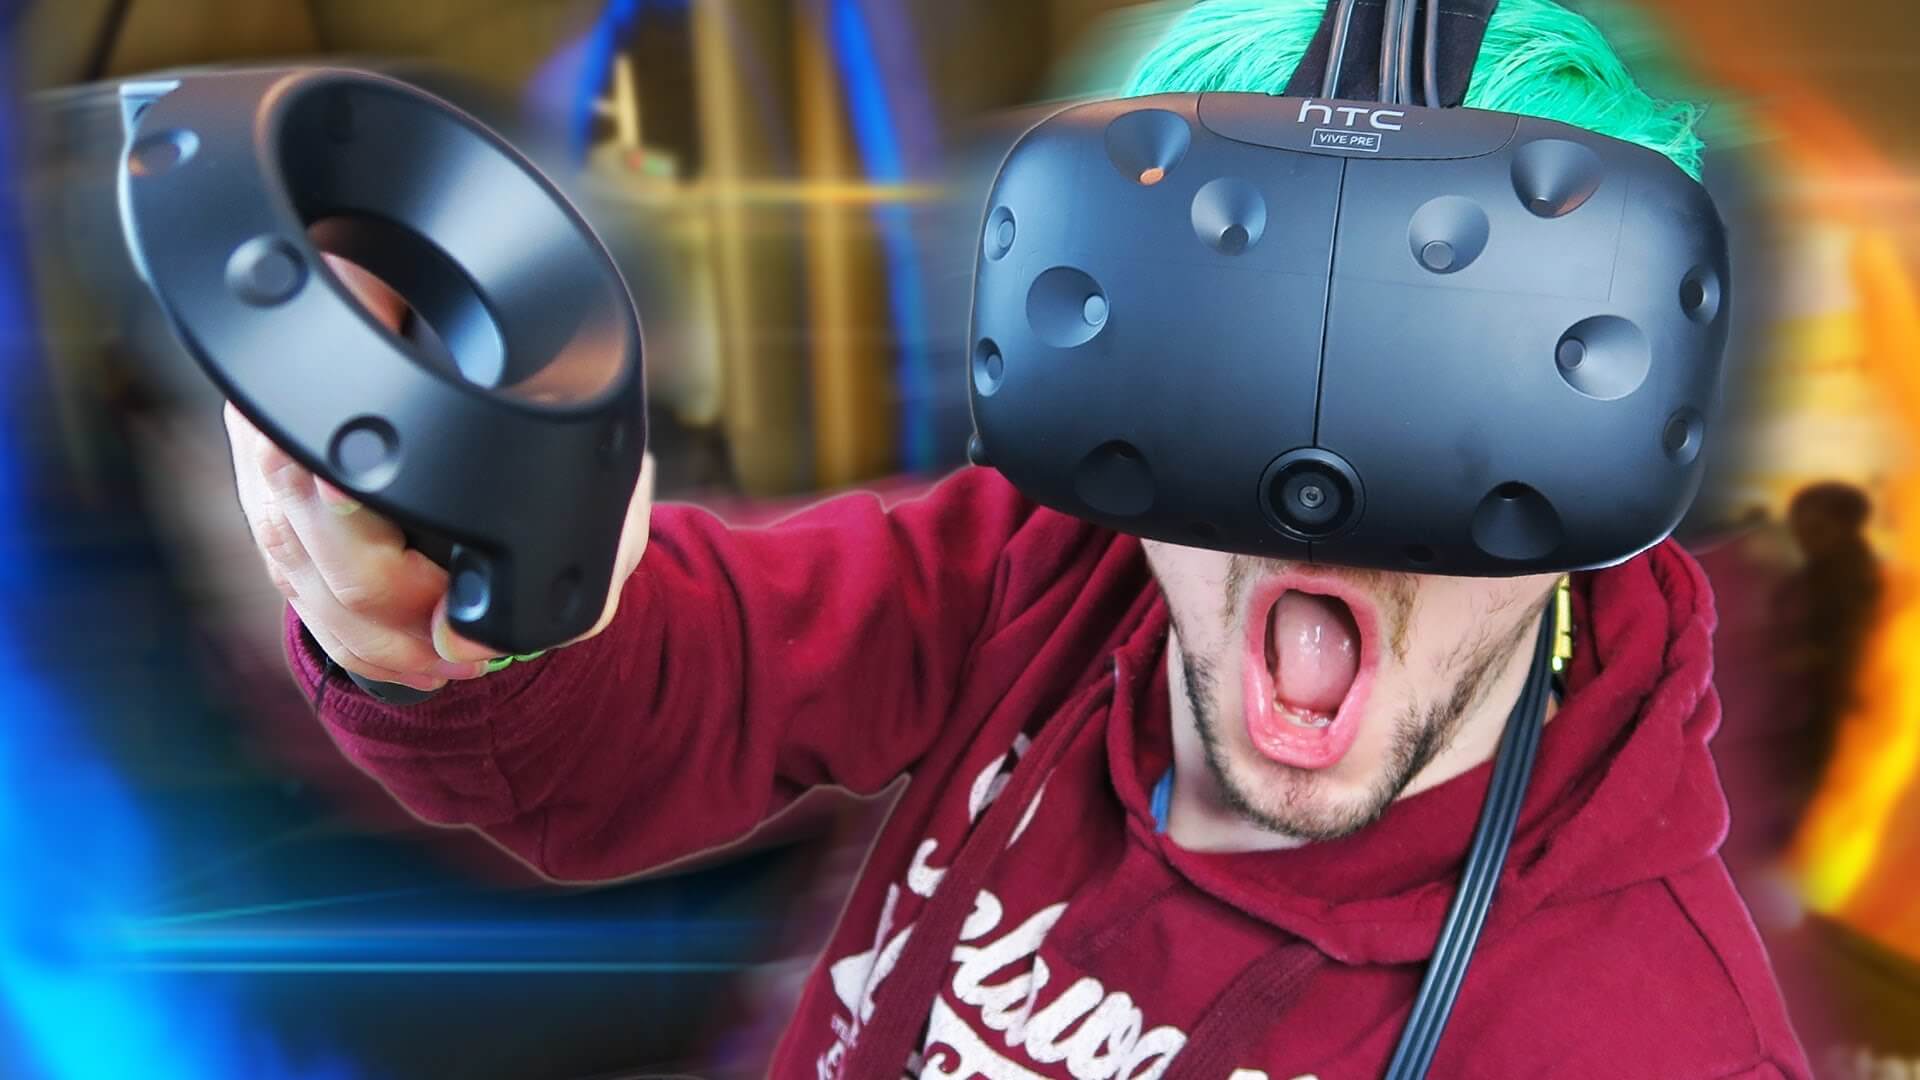 Underdogs vr. Шлем vr50. VR аттракцион Окулус 2. Шлем виртуальной реальности. Ребенок в шлеме виртуальной реальности.